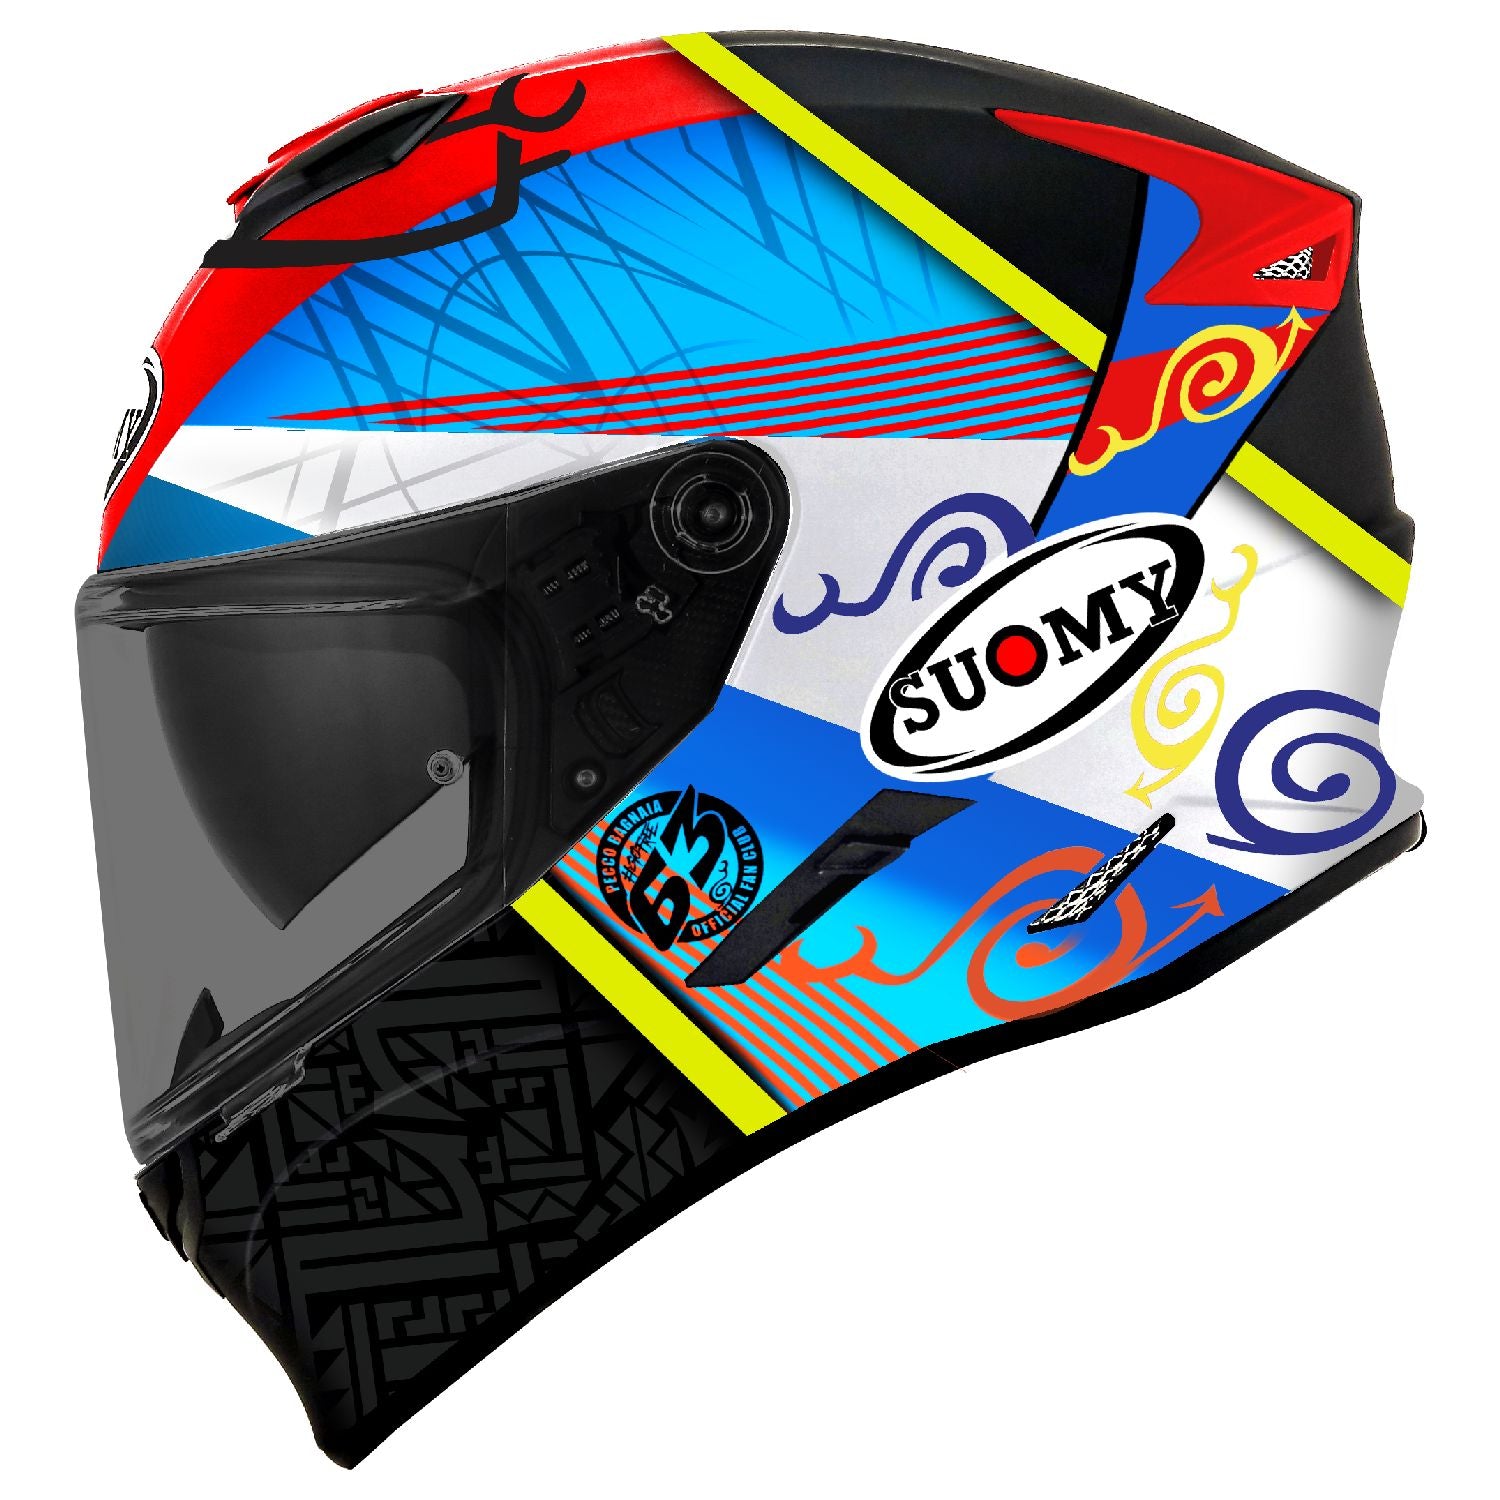 Suomy Stellar Pecco Bagnaia Replica Full Face Motorcycle Helmet (XS - 2XL)